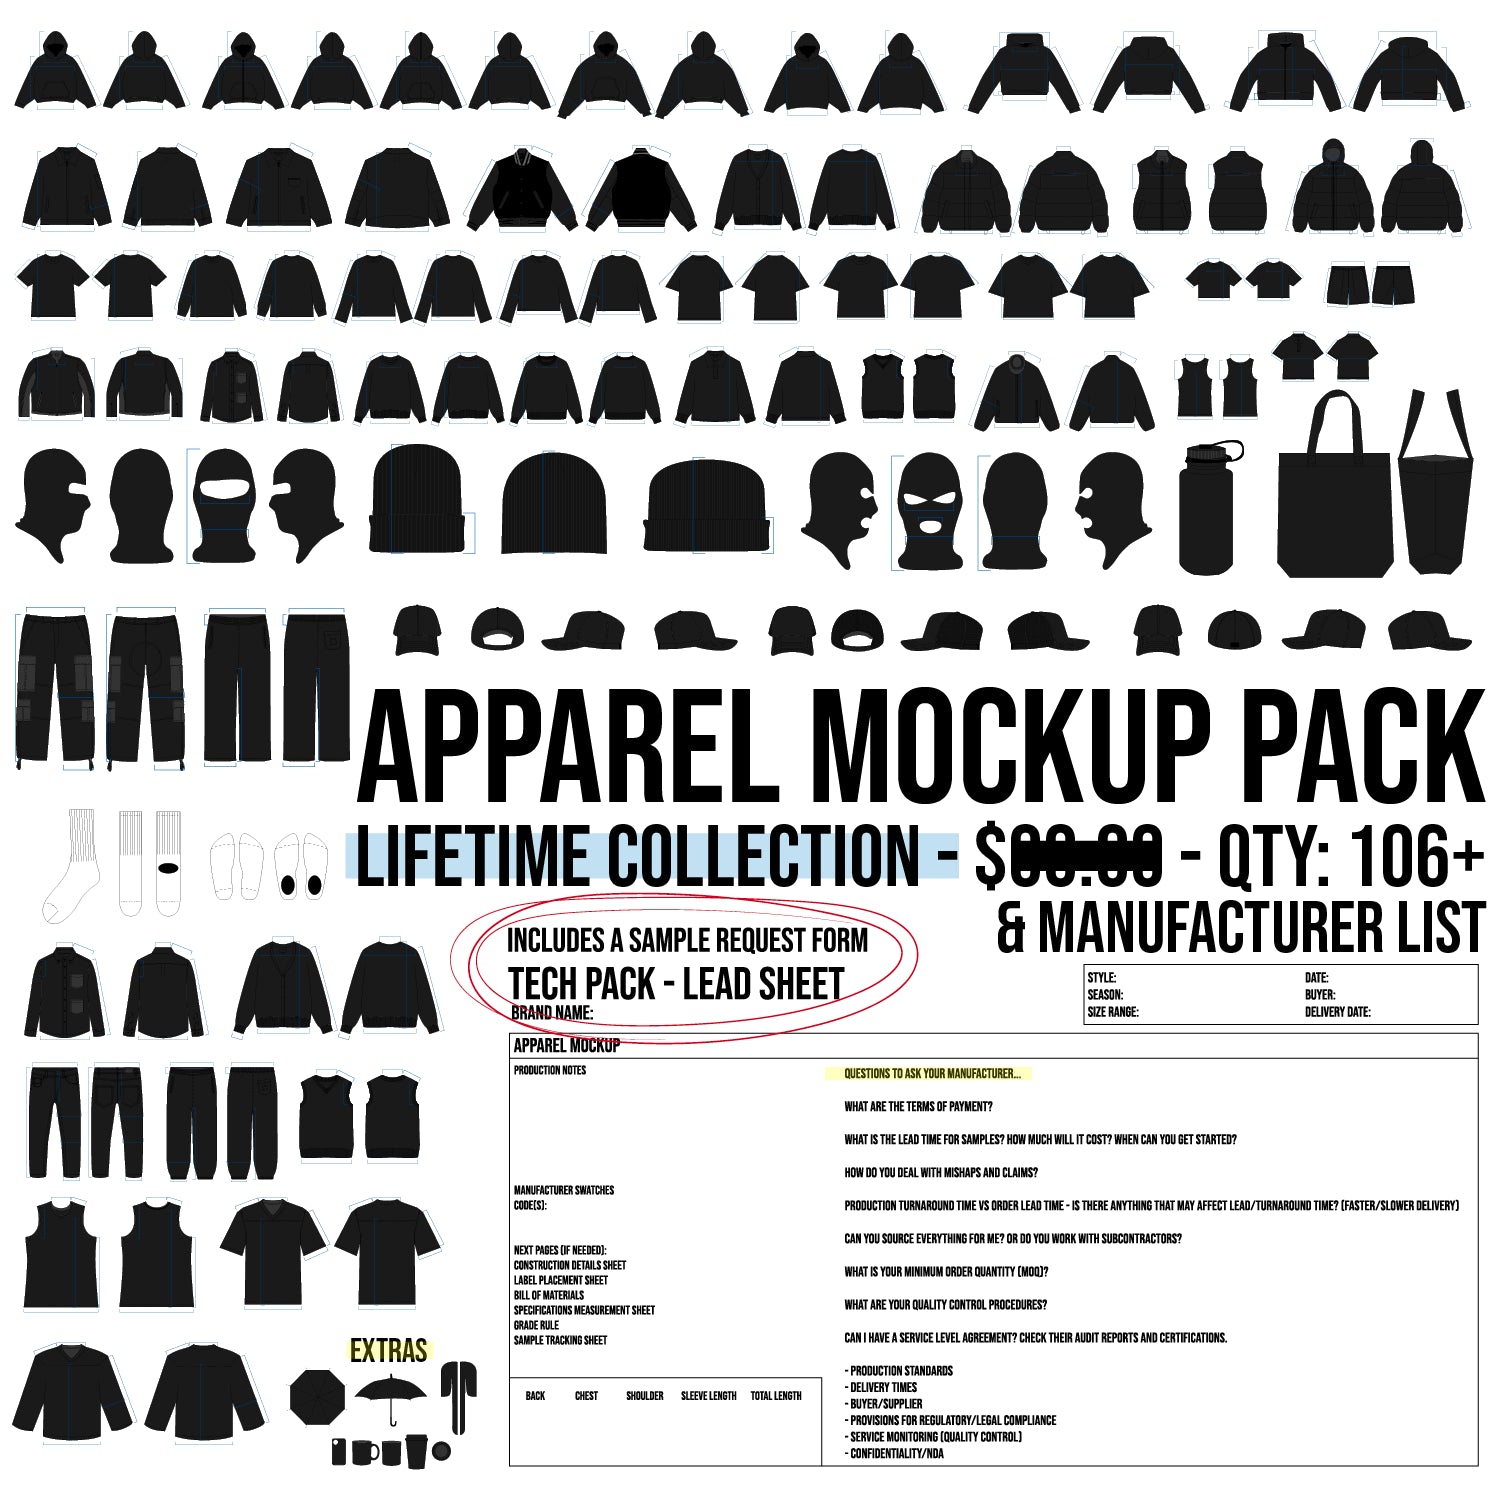 Apparel Mockup Pack